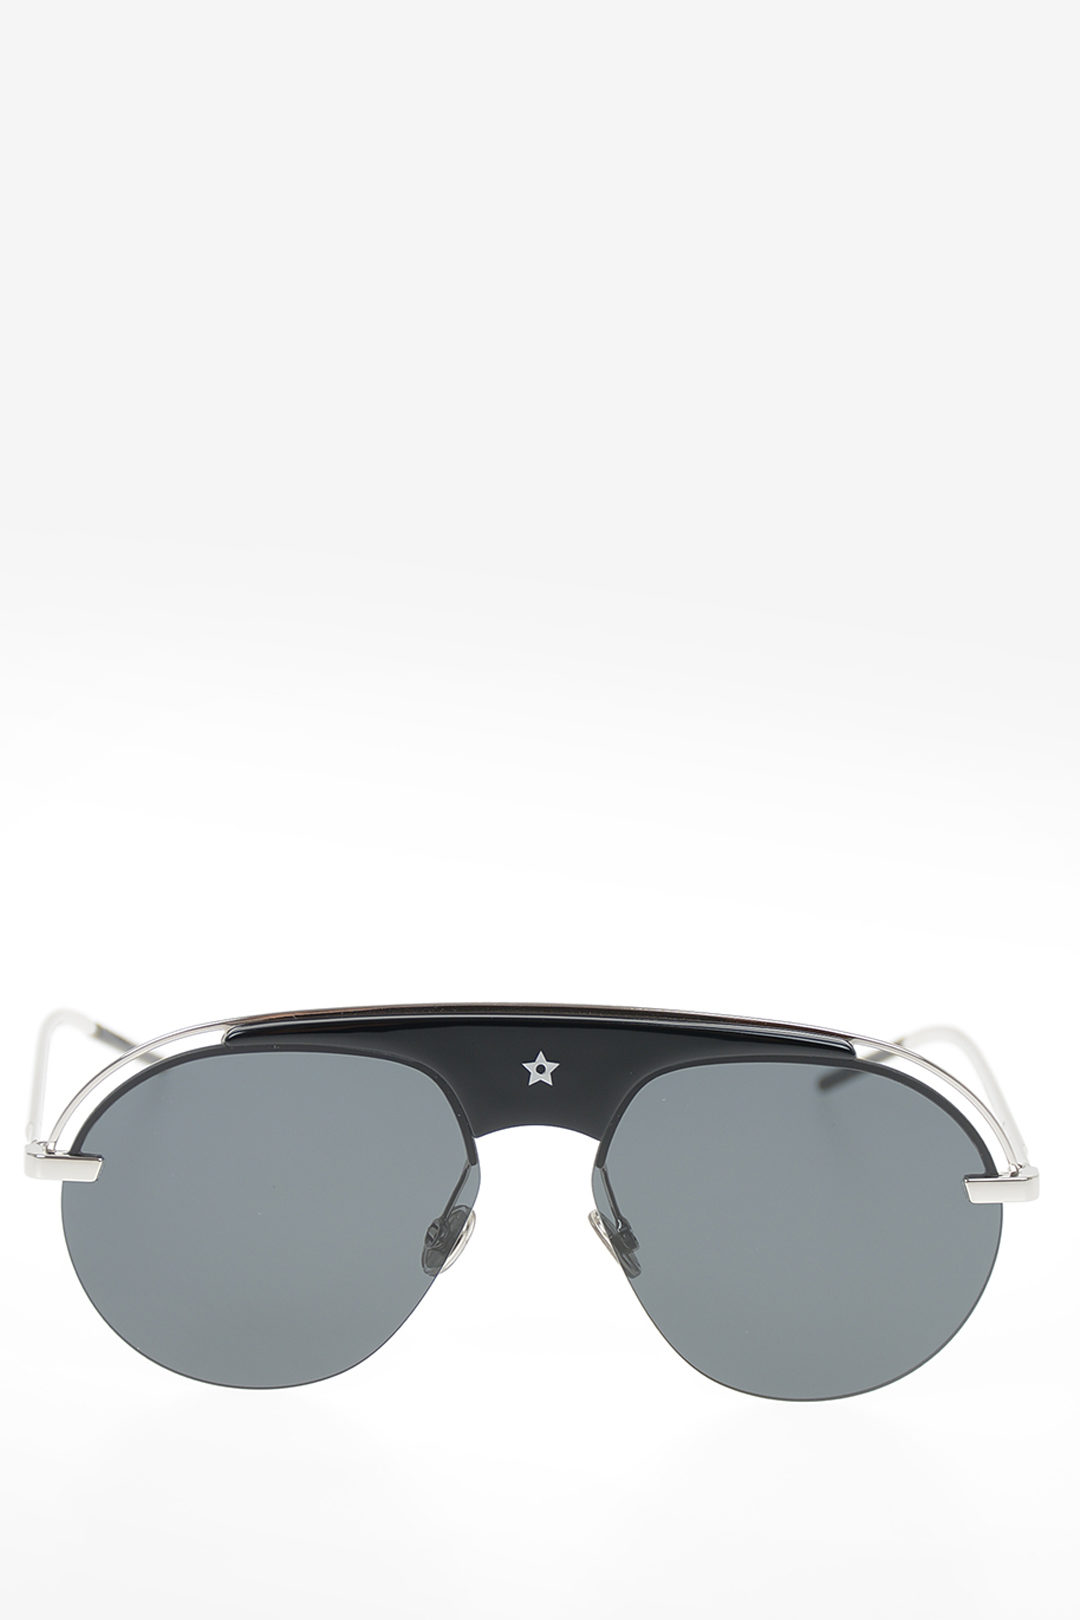 Christian Dior Aviator Sunglasses Sorealpop DDBKU 59  Foxy Luxury